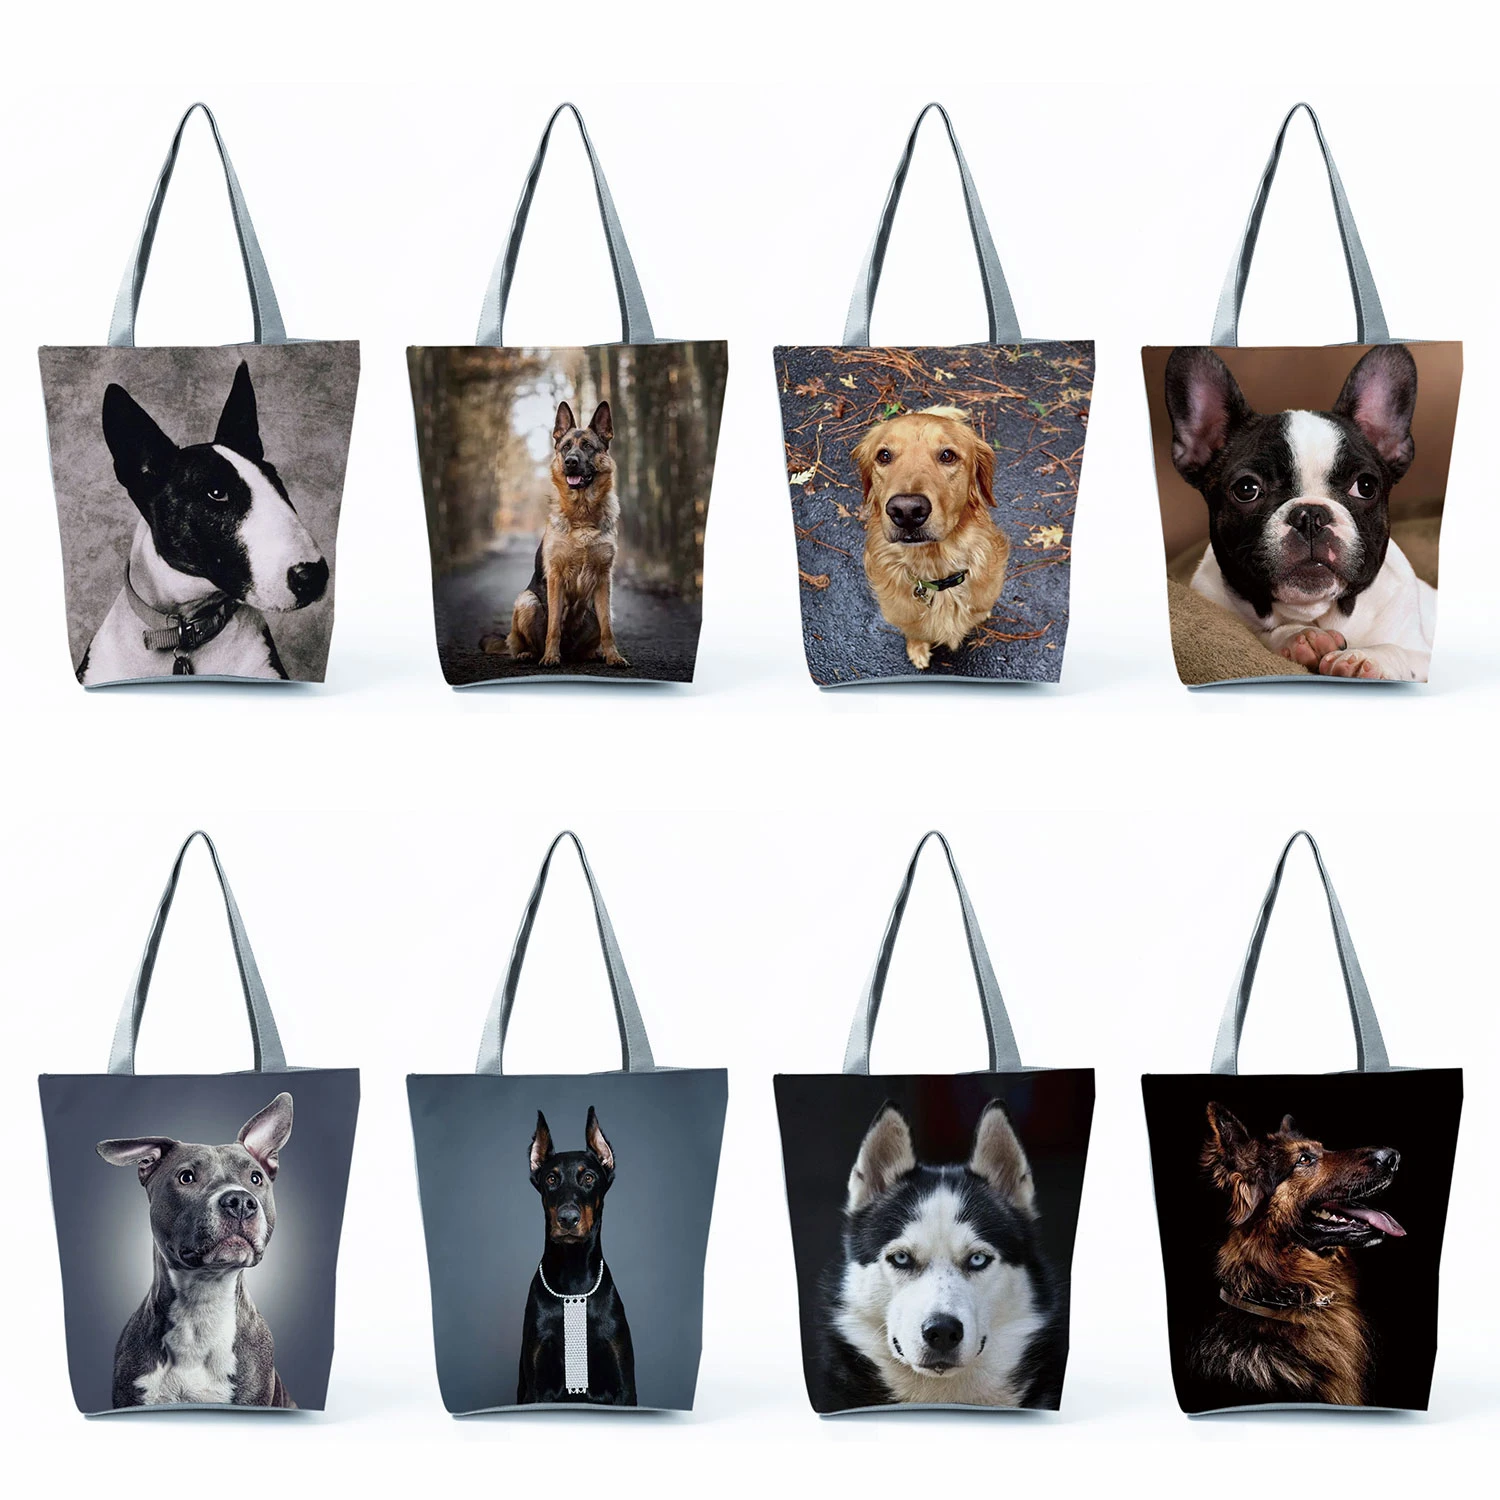 Dog Printed Women Handbags Animal Fashion Tote Shoulder Bags Large Capacity Shopping Bag Female Custom Pattern Travel Beach Bag keychain wallet